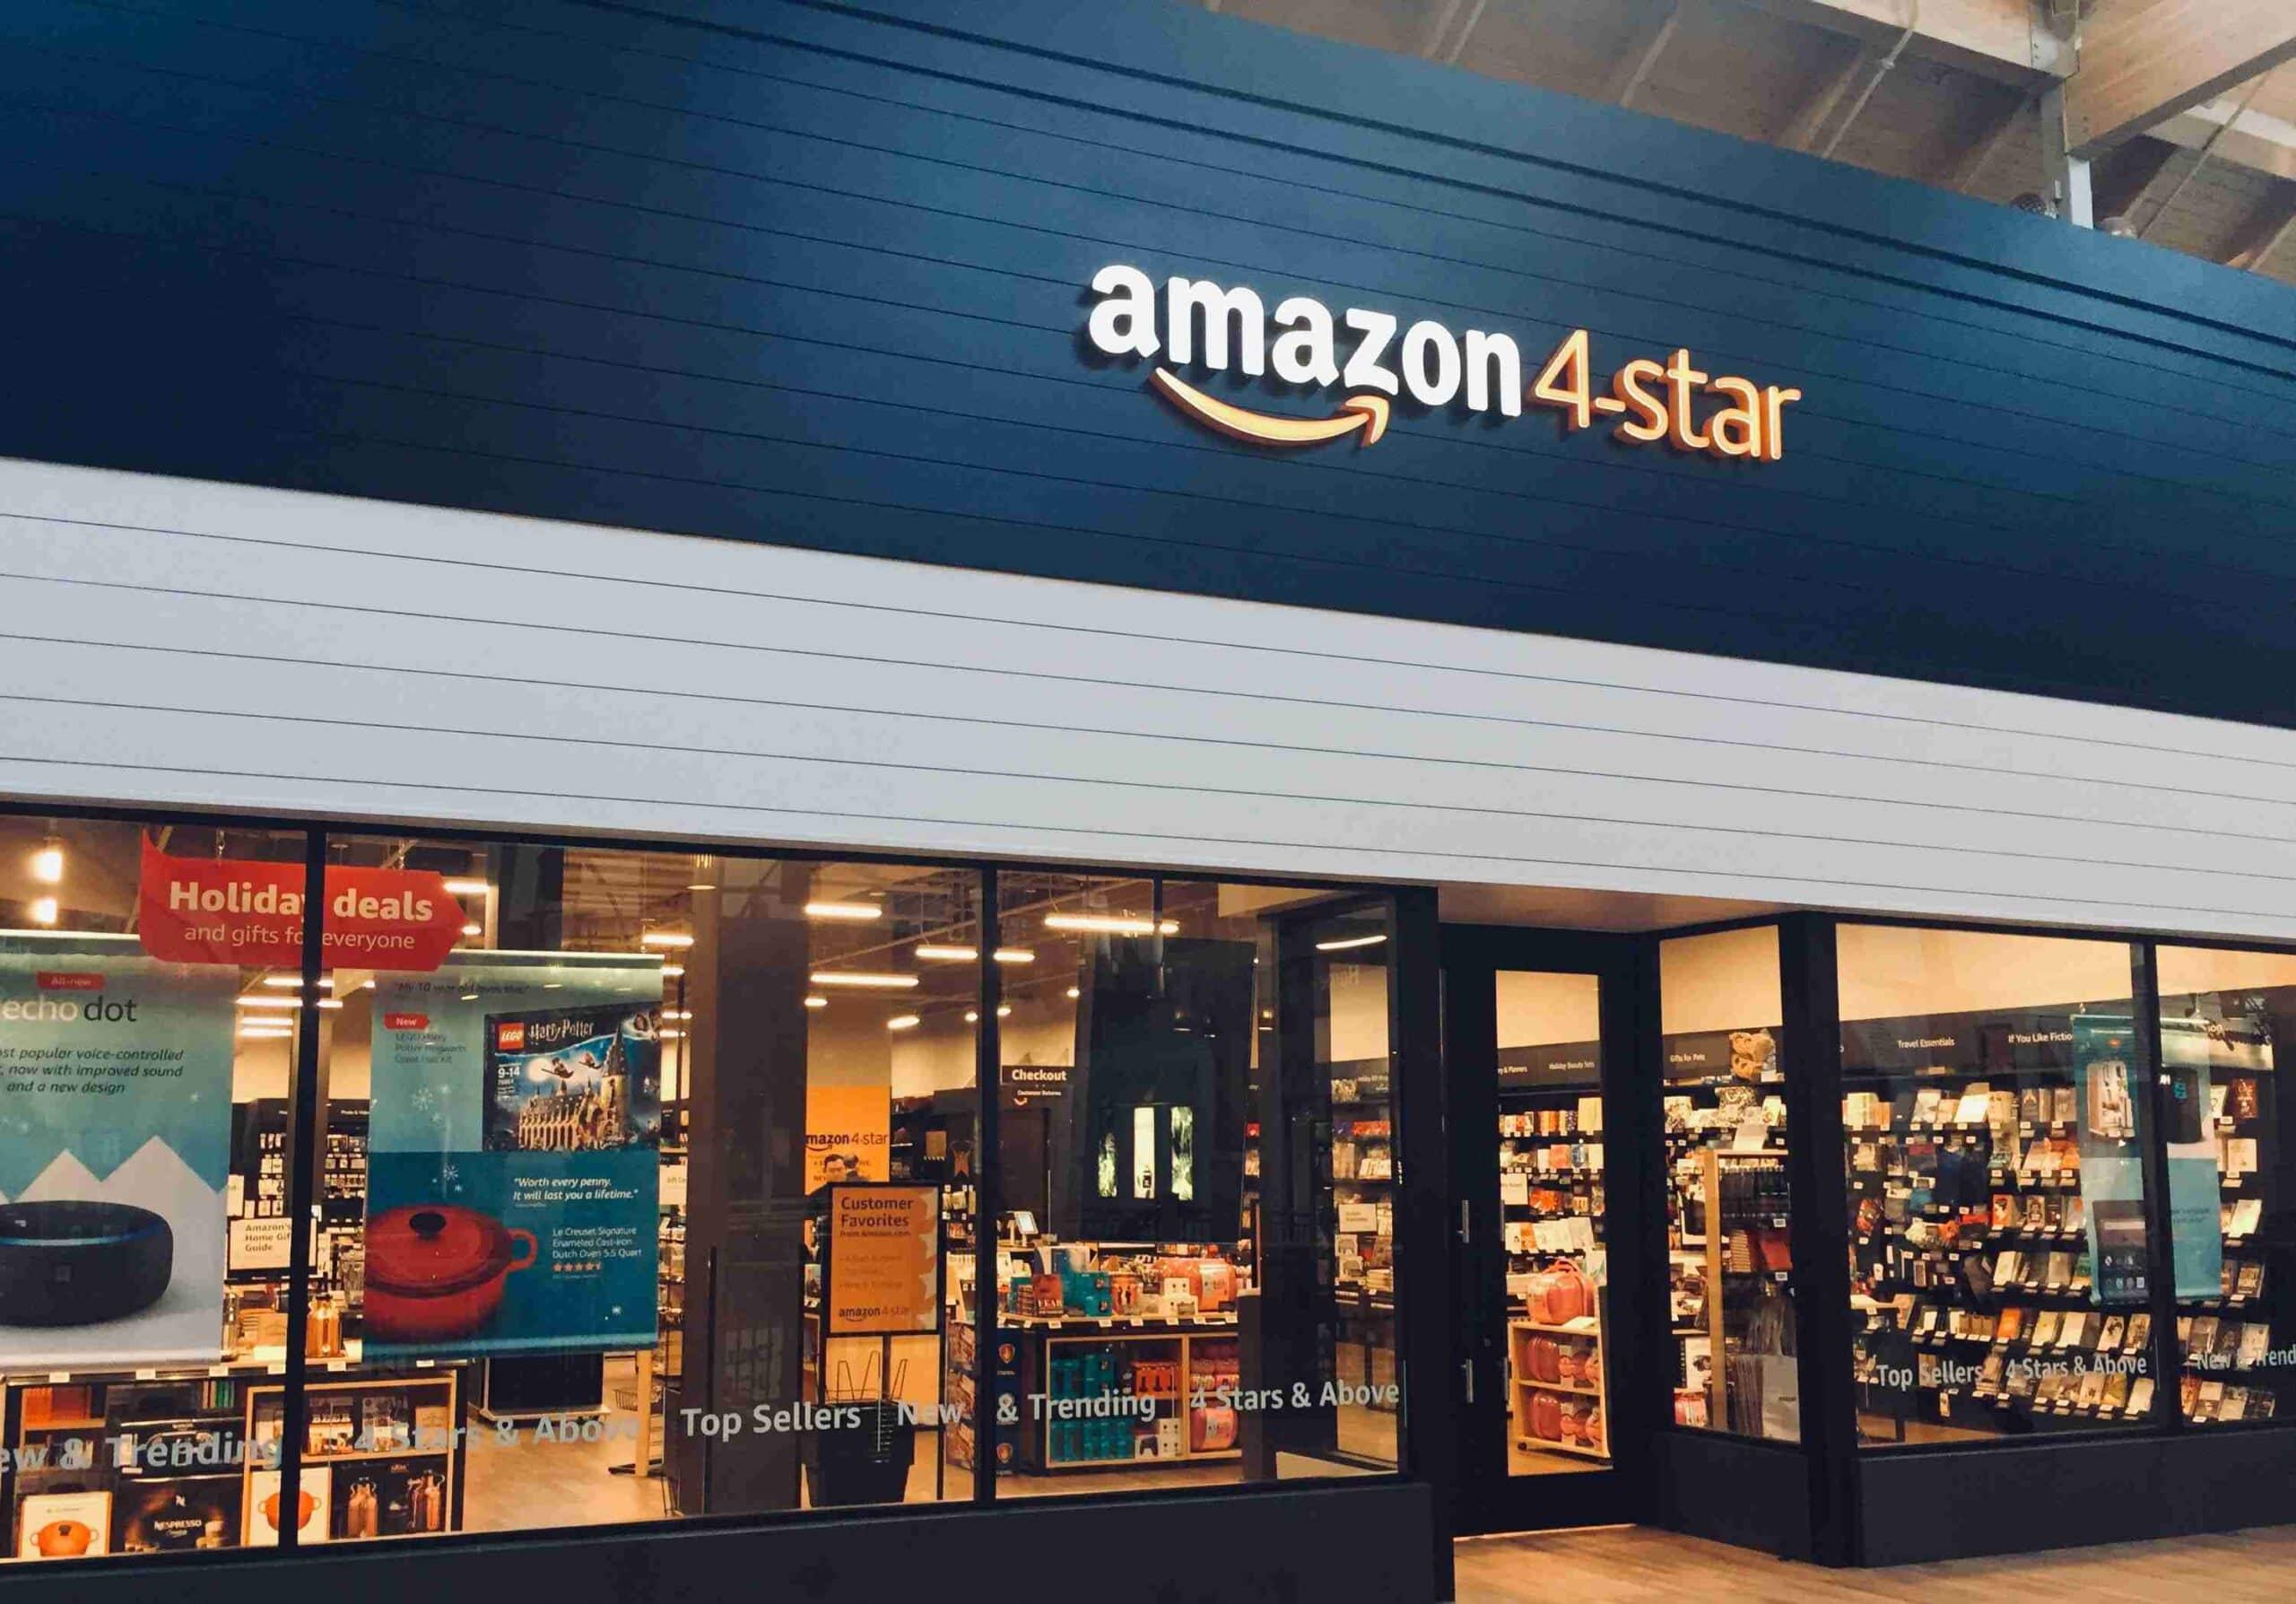 Amazon 4-star storefront